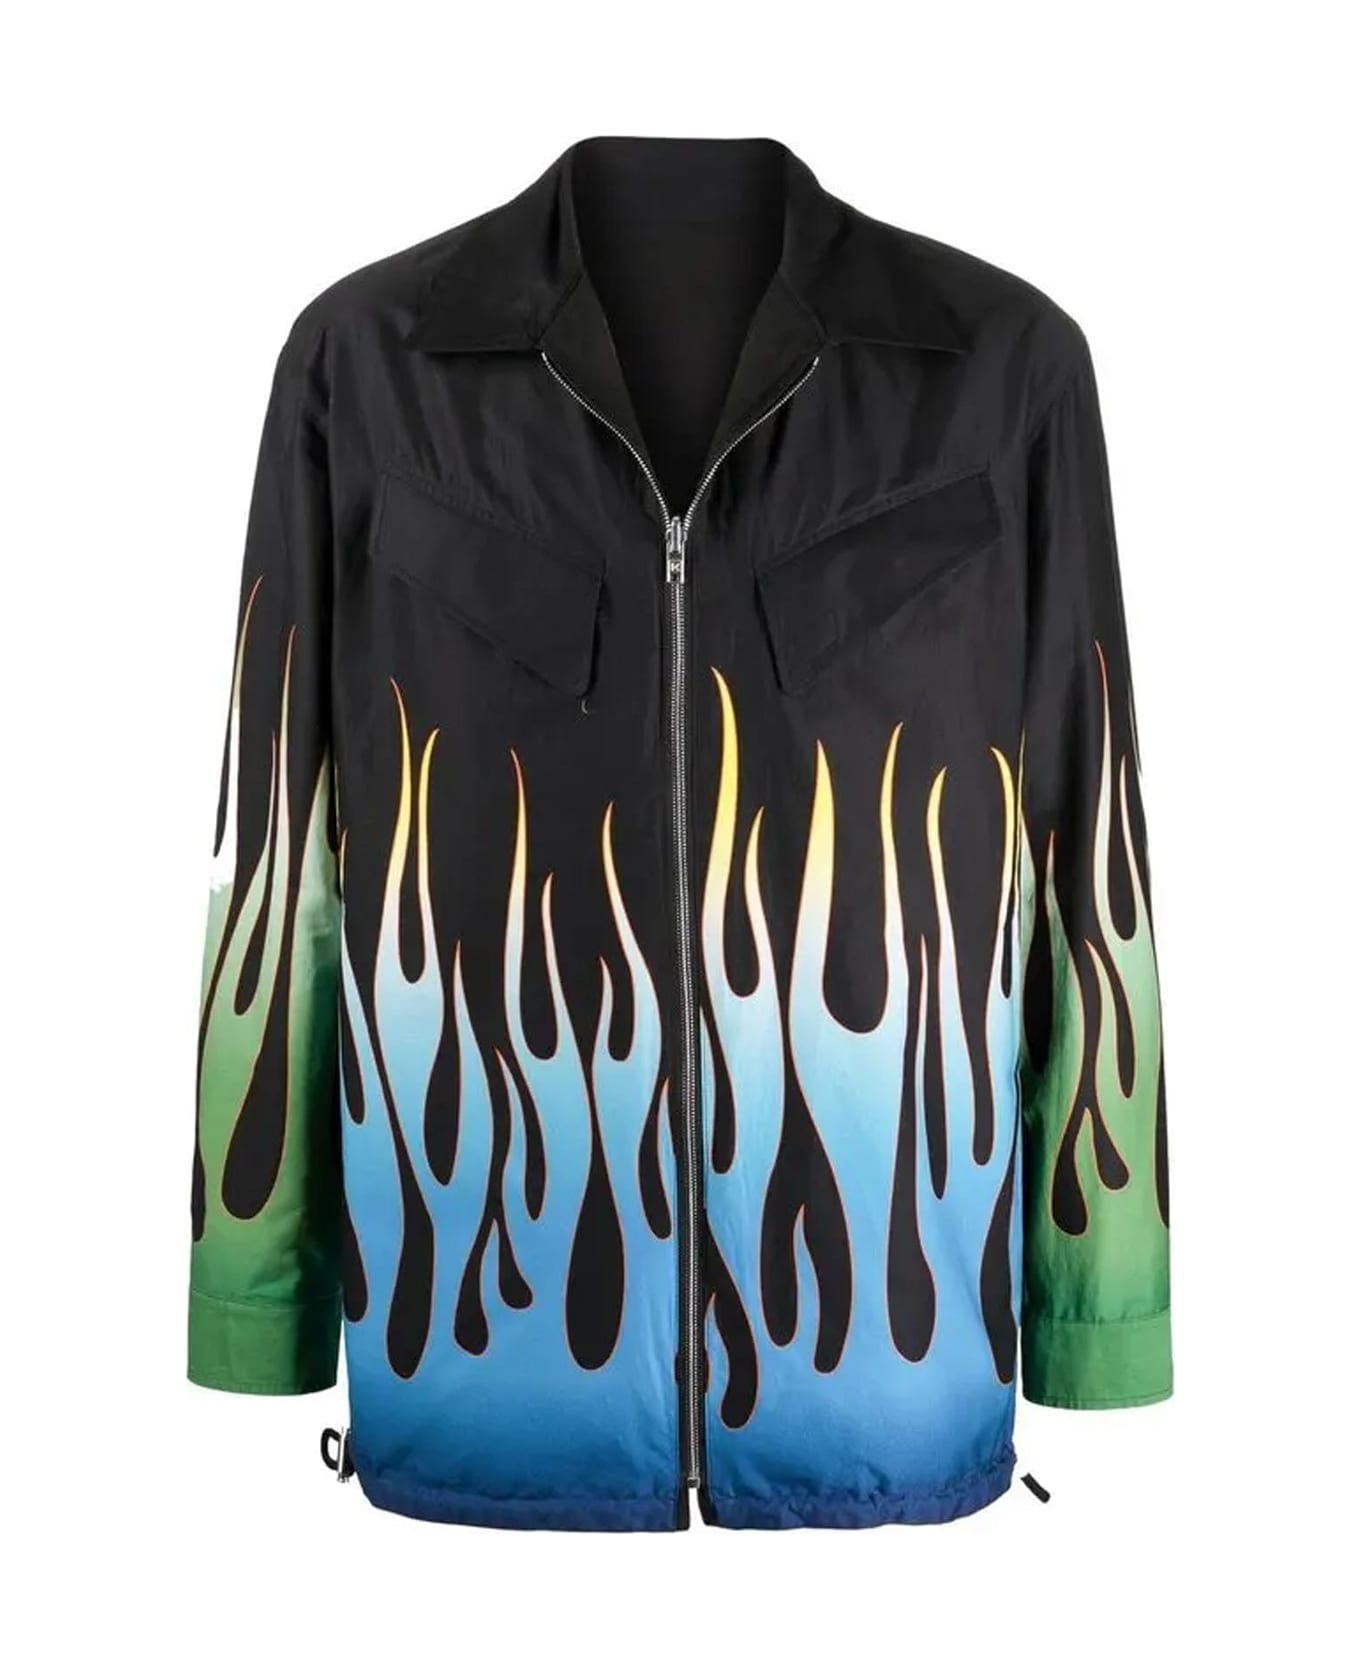 Kenzo Flame Print Reversible Jacket - Black